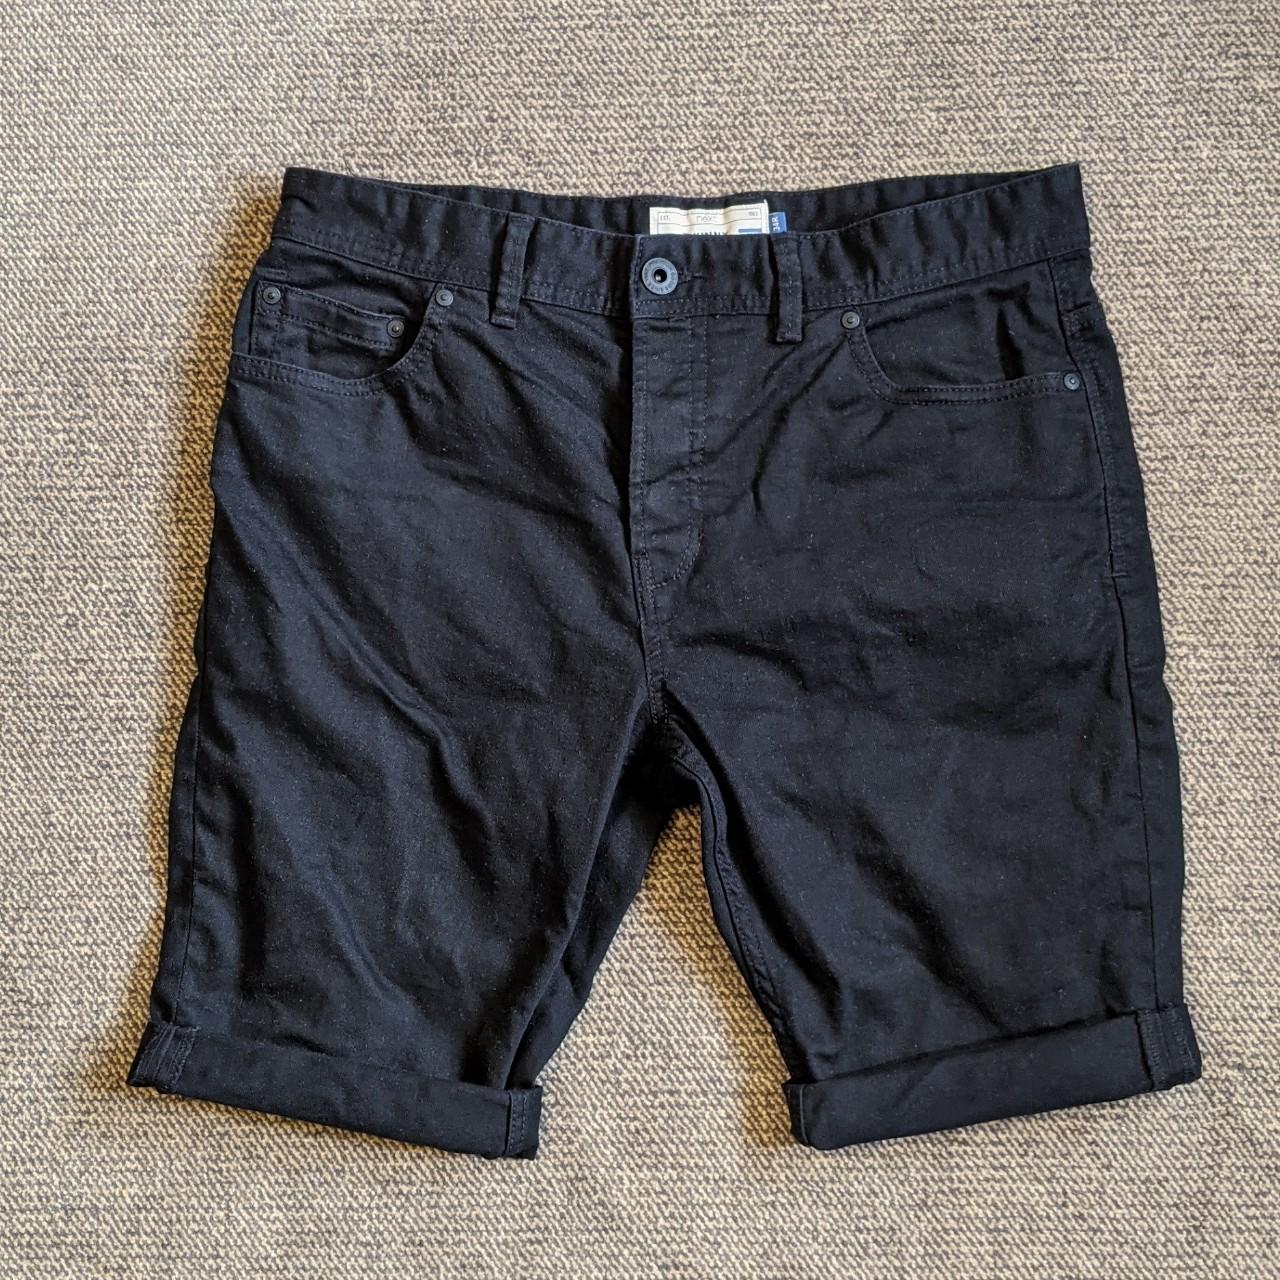 NEXT black denim shorts 34 waist. - Depop